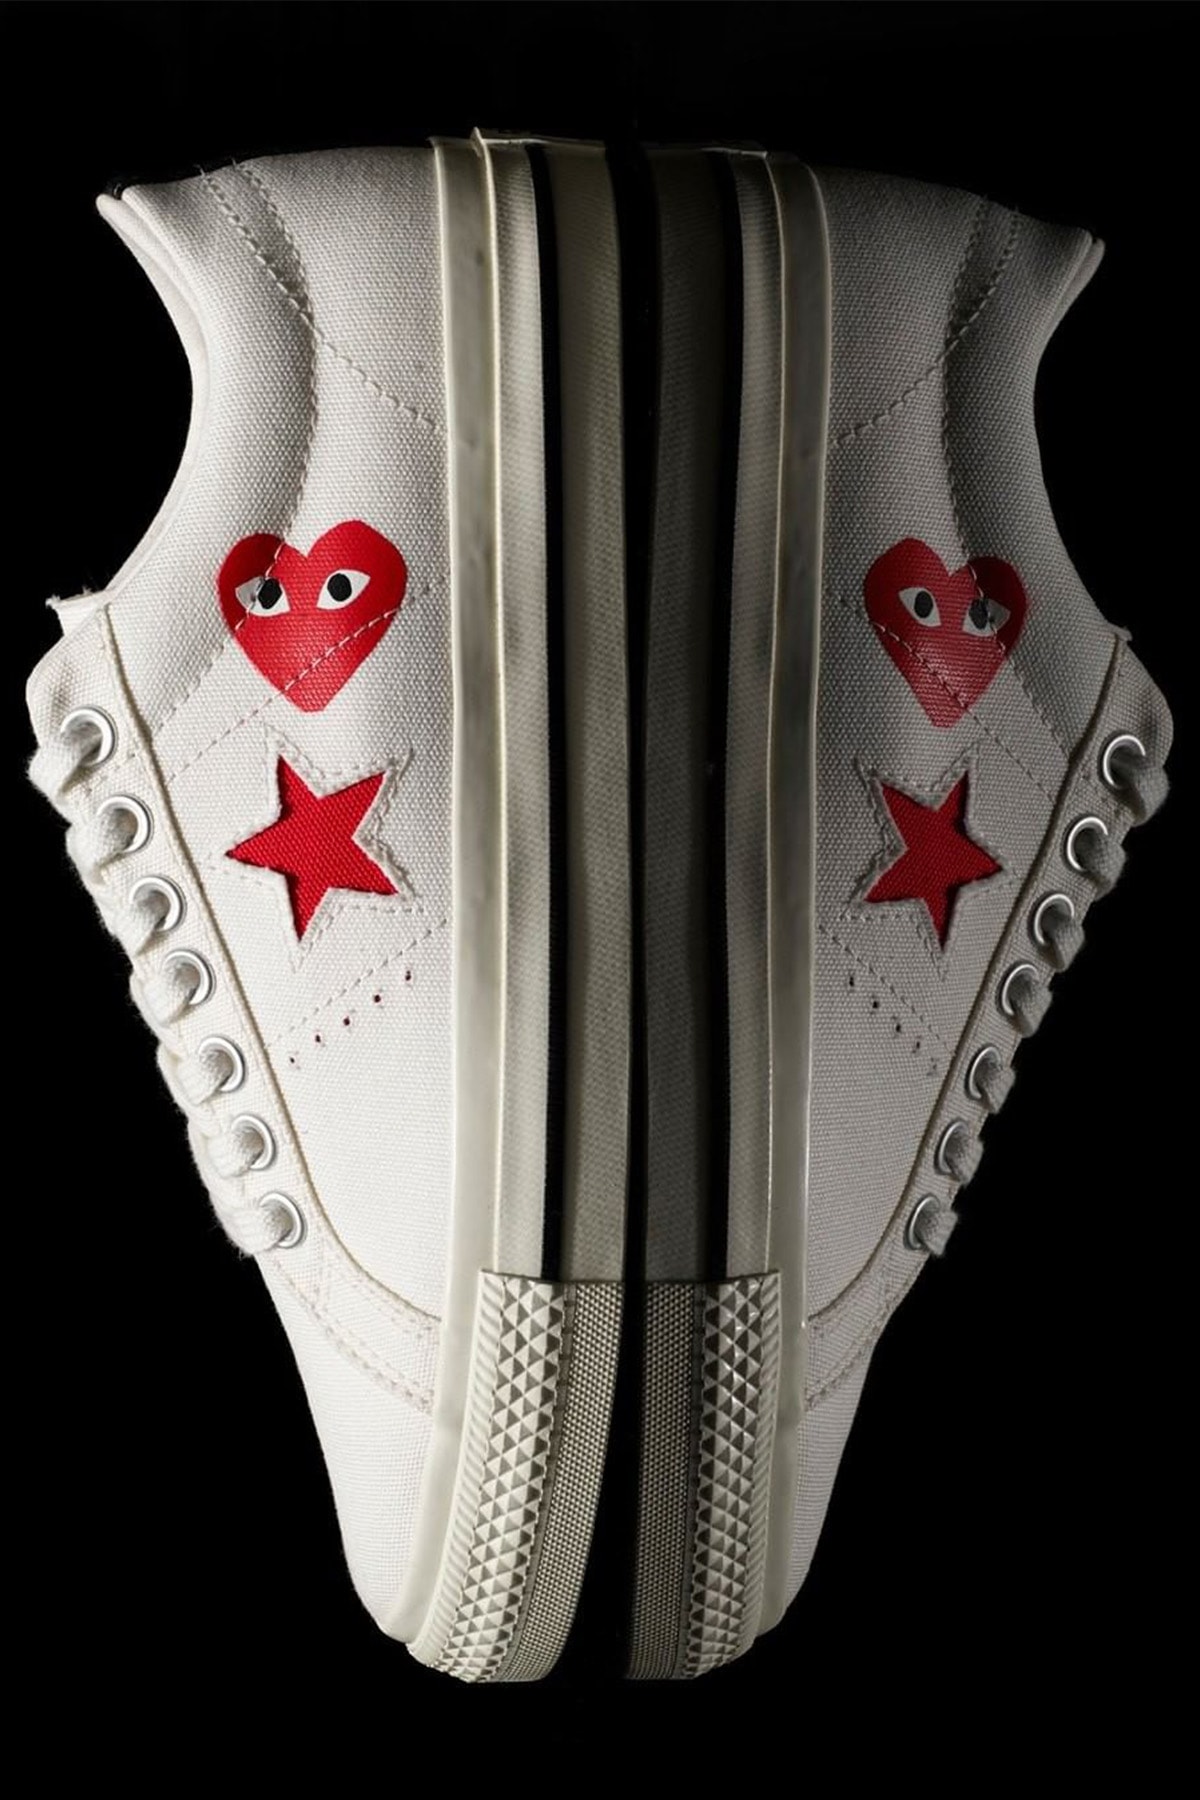 COMME des GARÇONS PLAY x Converse One Star 聯乘系列鞋款發佈